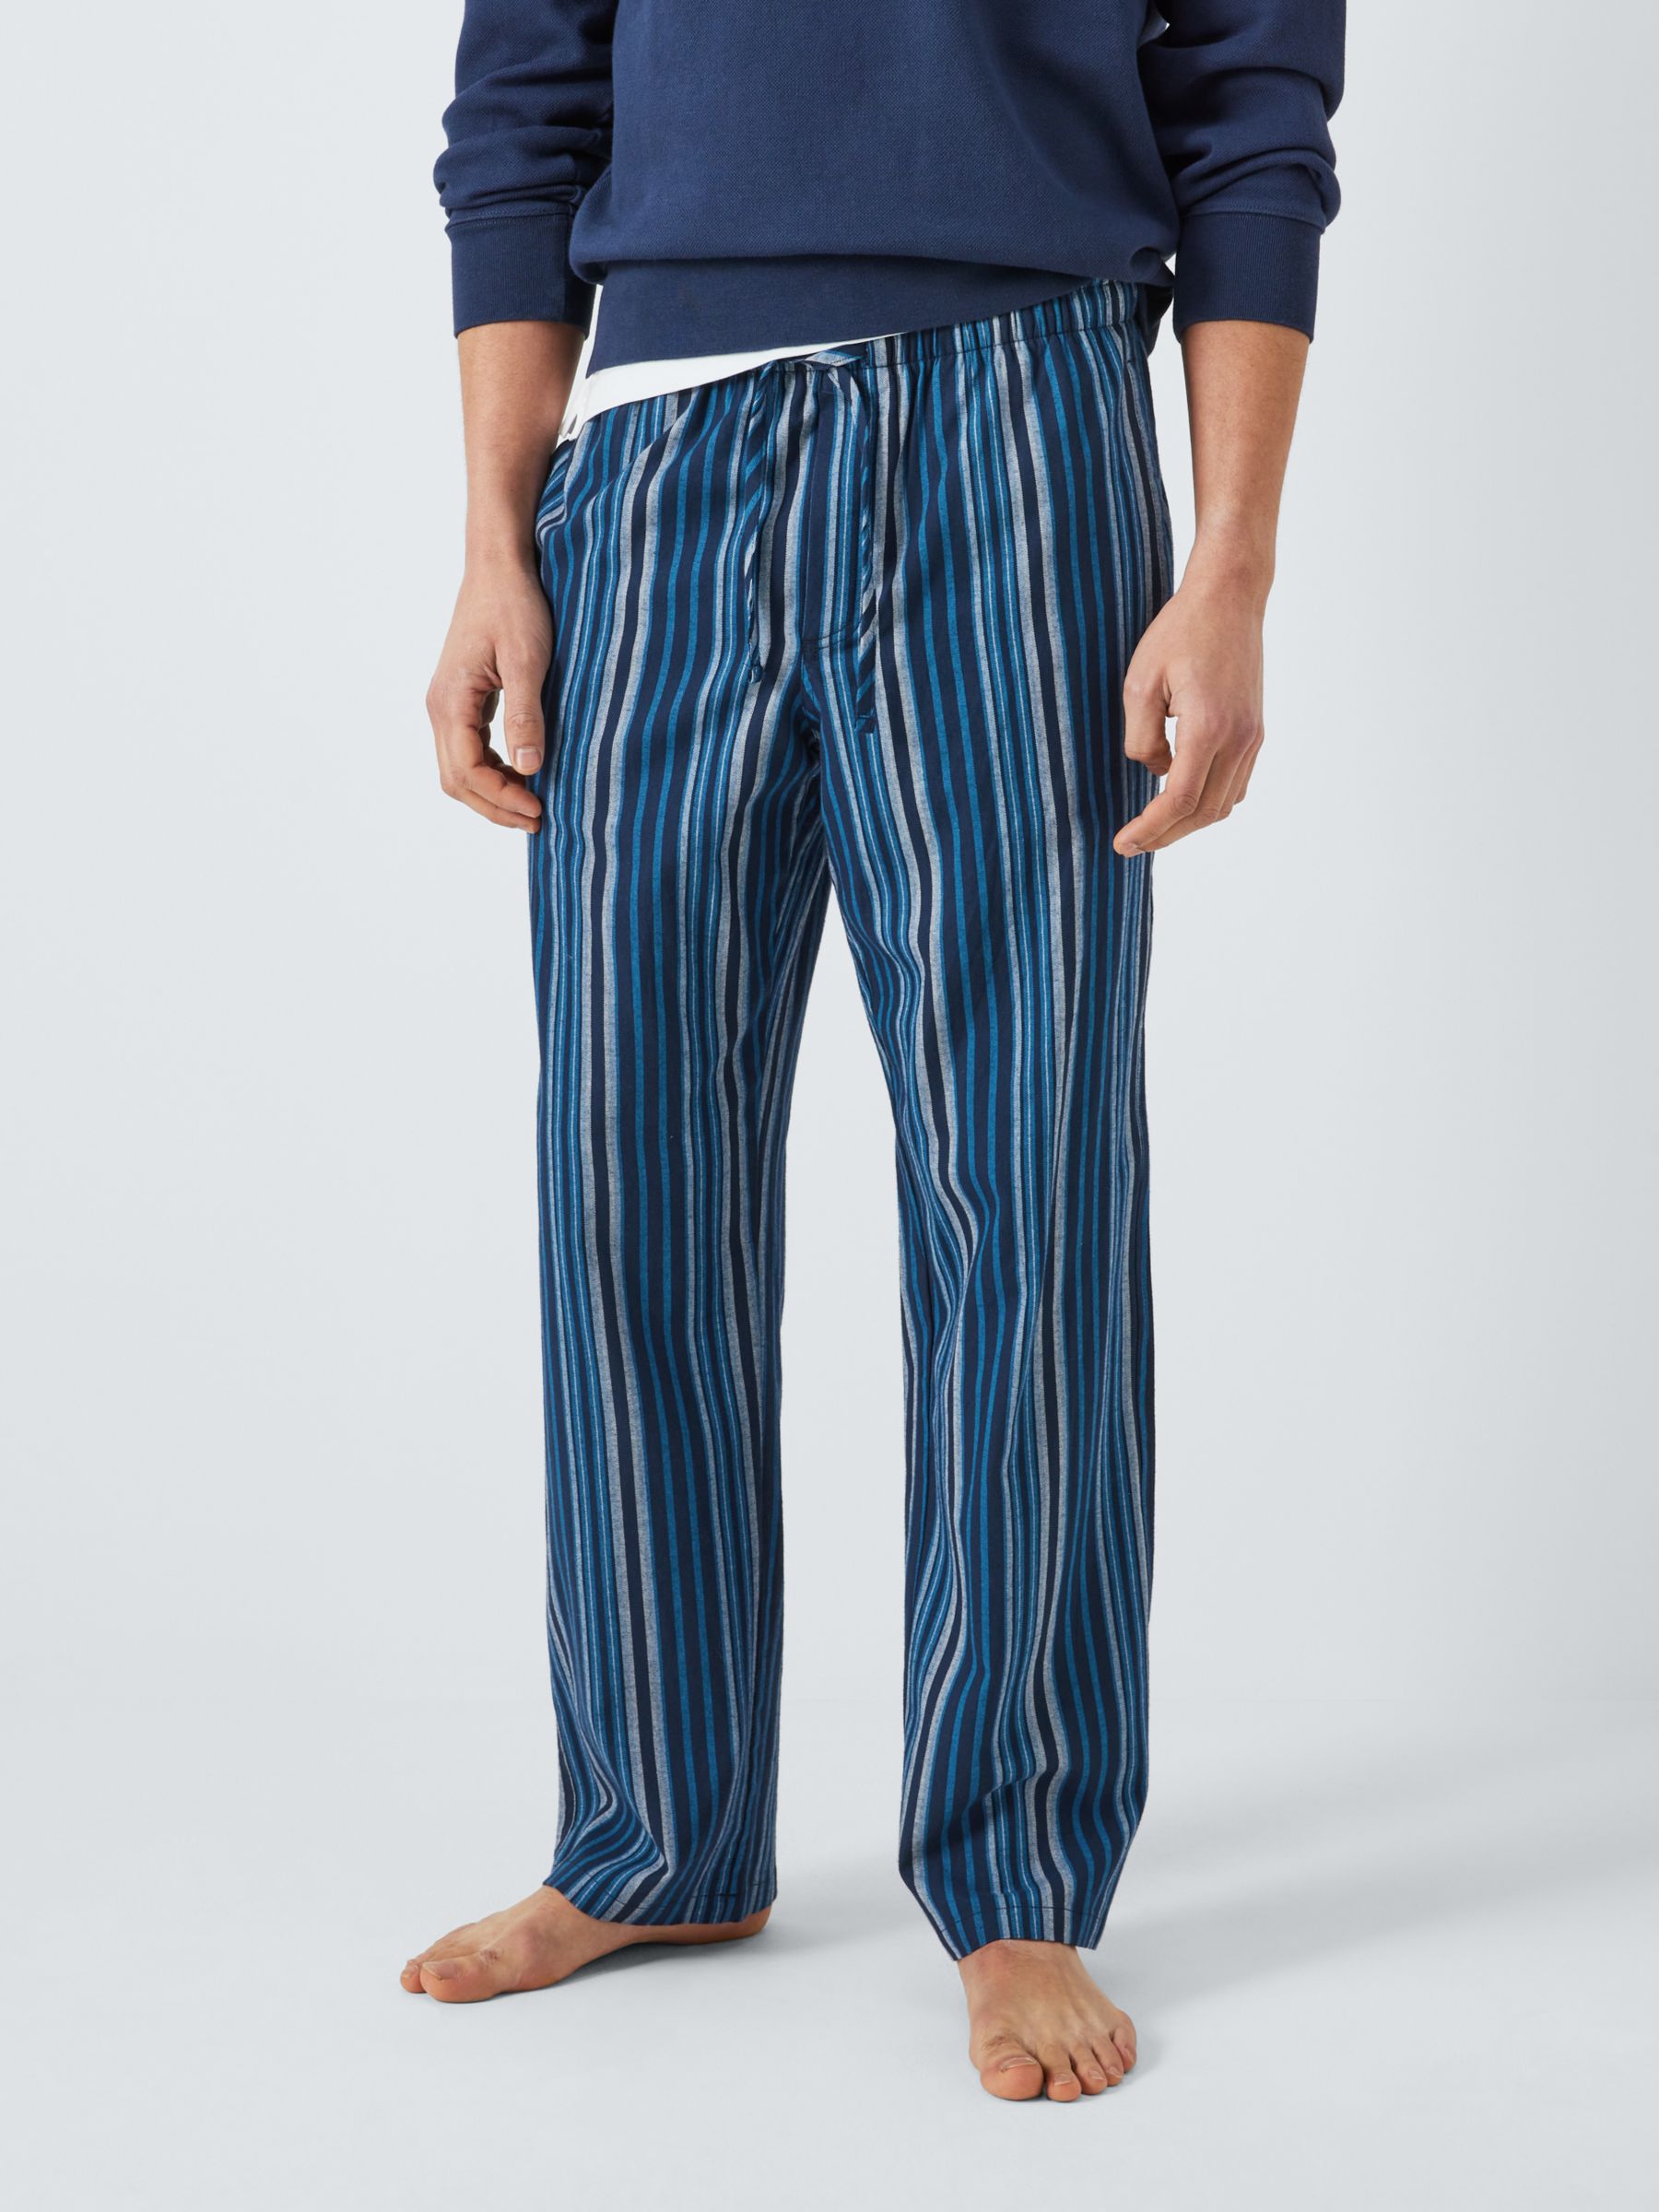 TH Original Woven Pyjama Bottoms, Blue